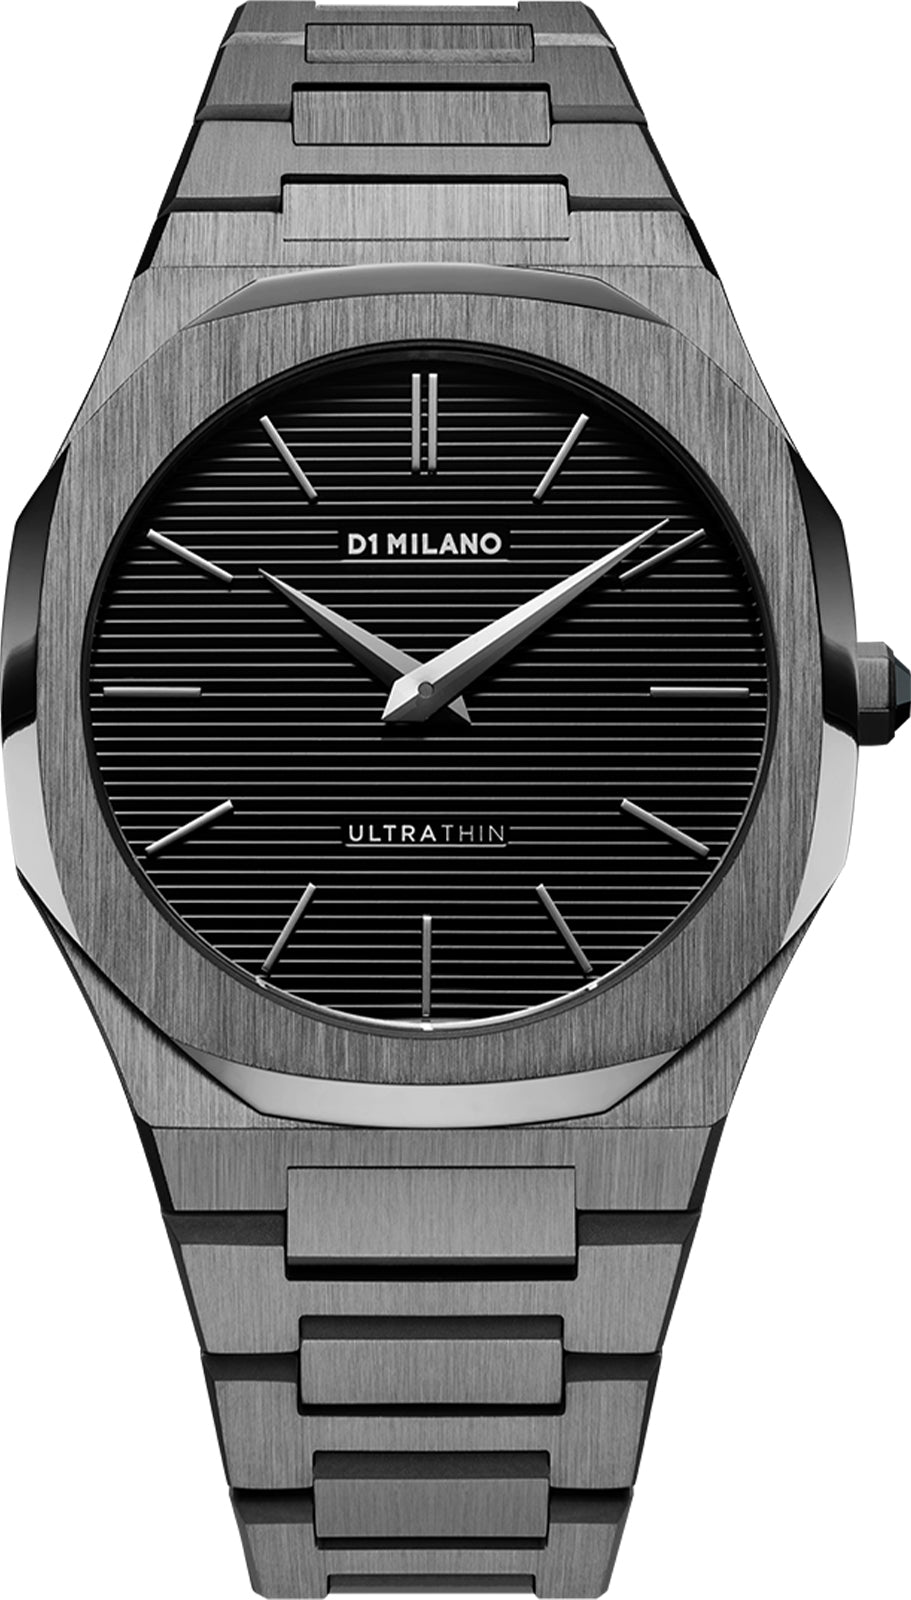 Photos - Wrist Watch Milano D1  Watch Ultra Thin - Black DLM-034 